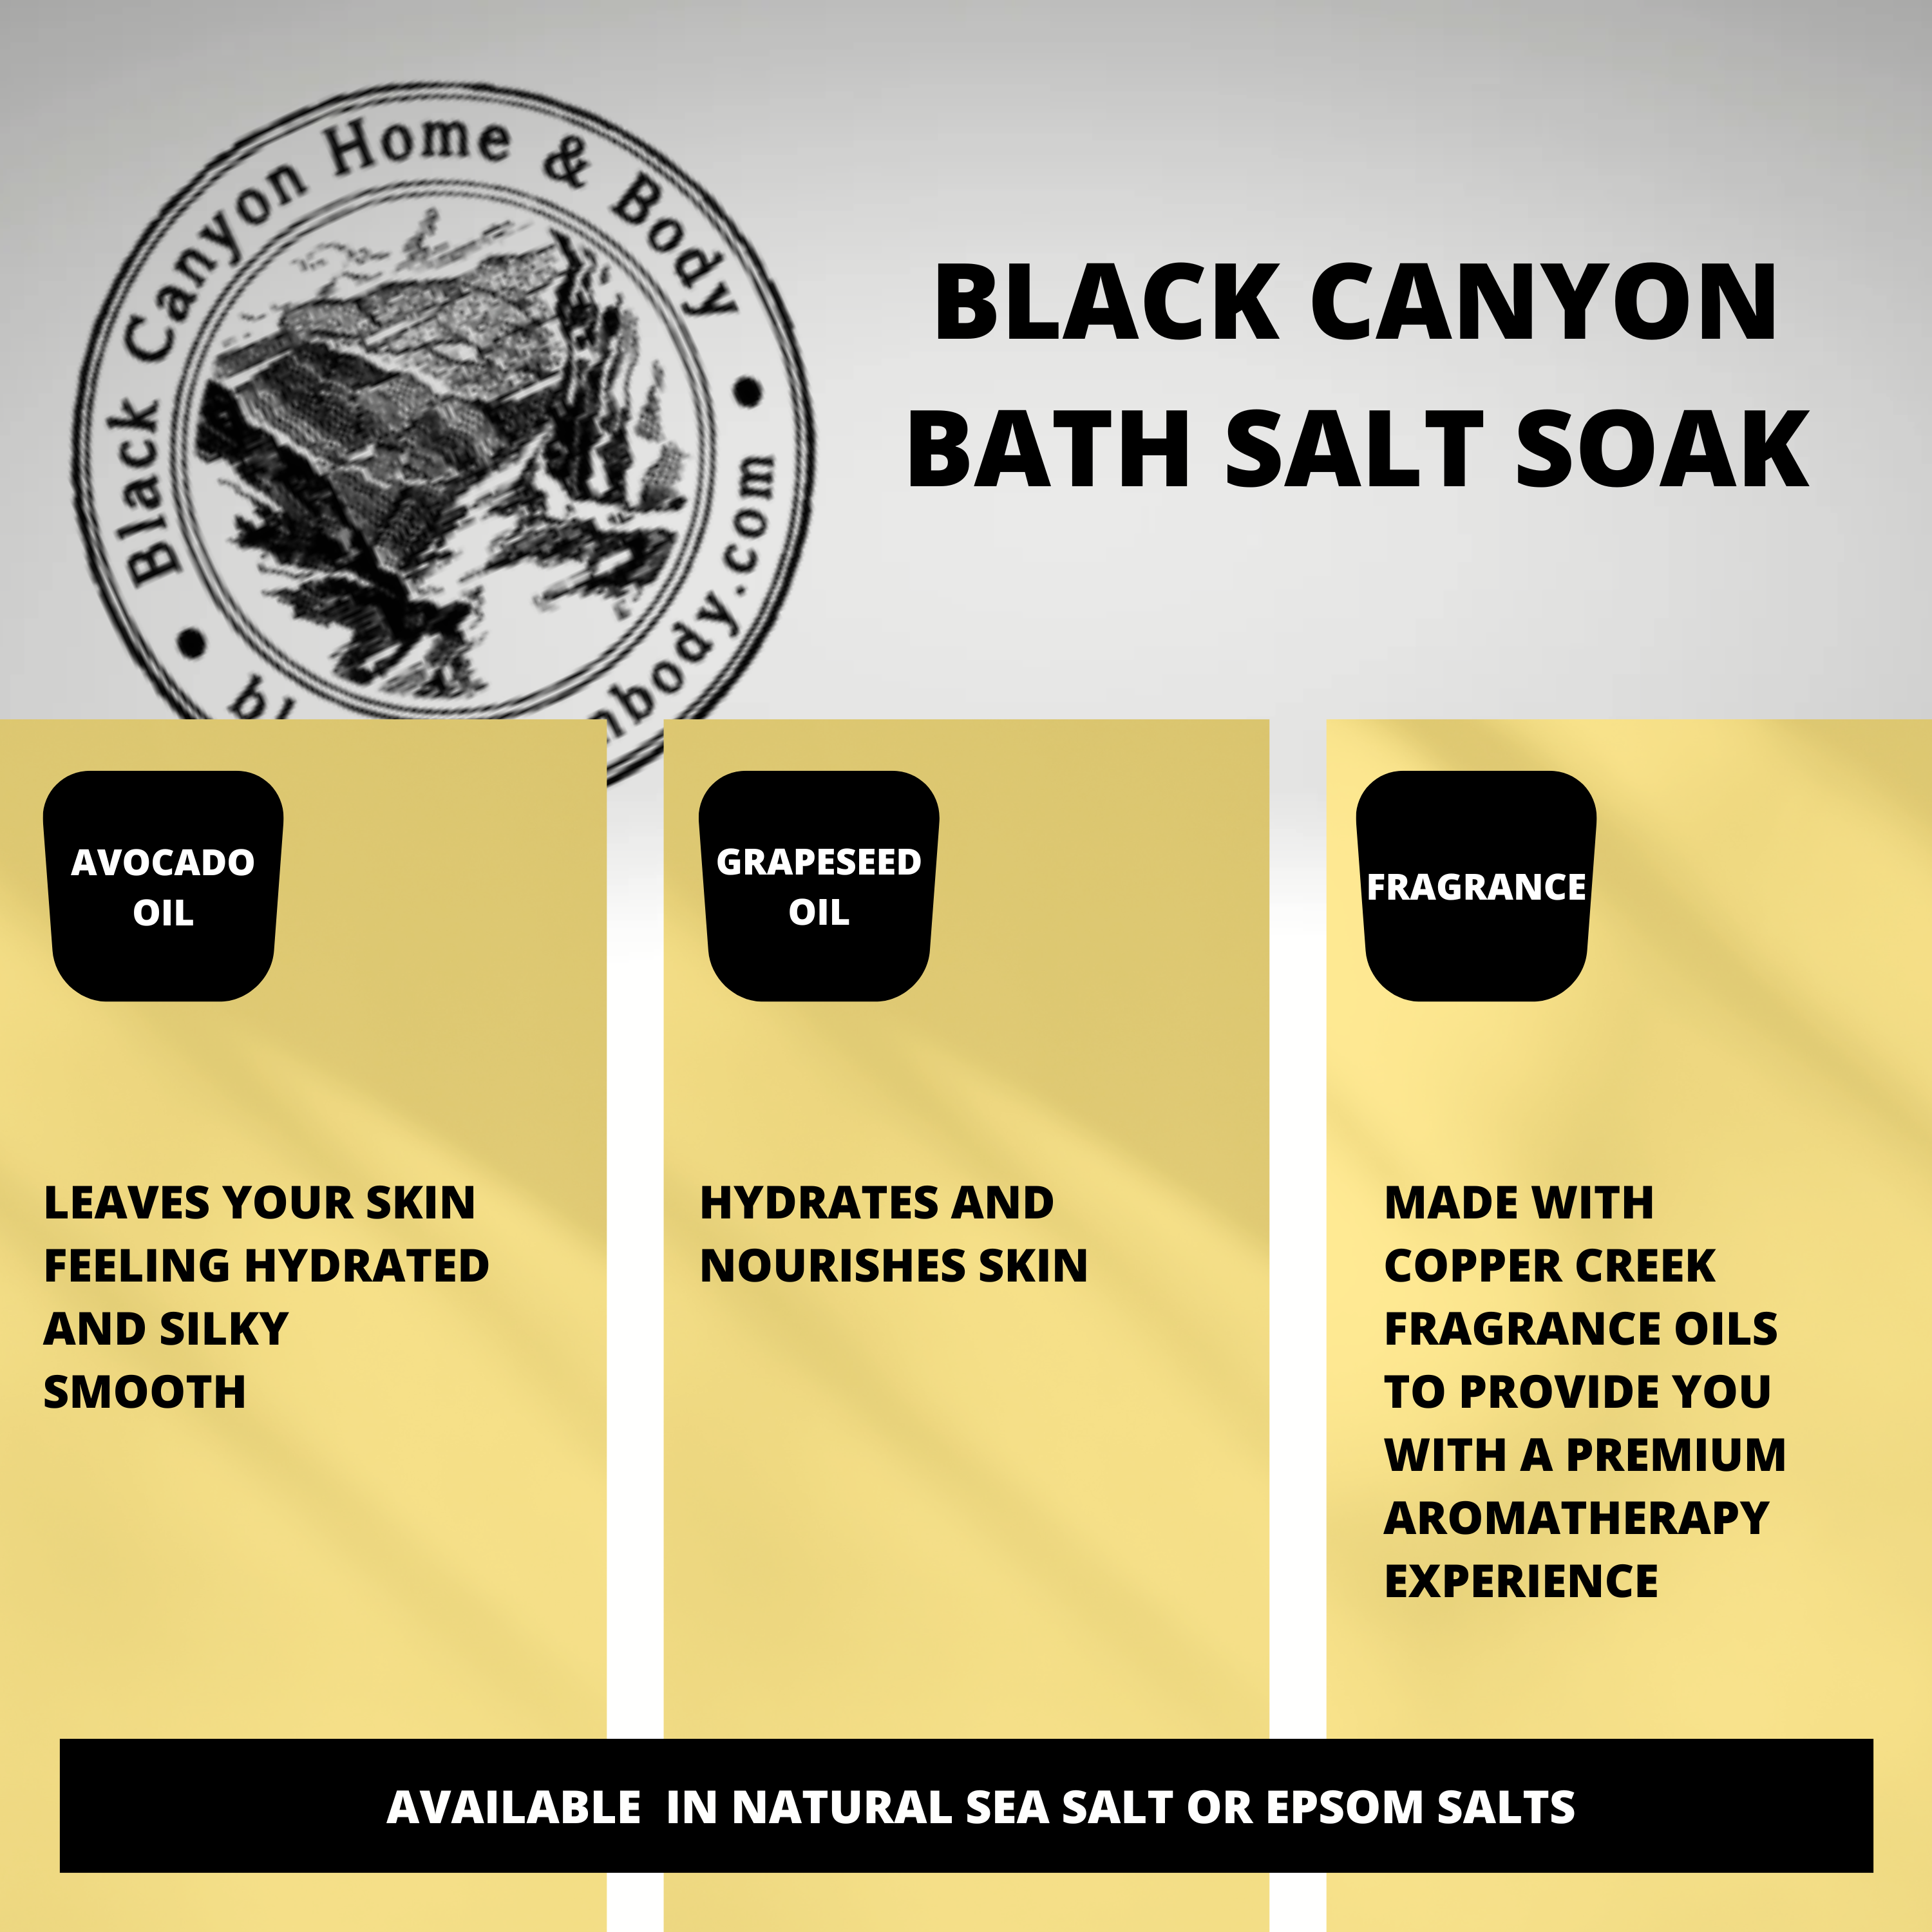 Black Canyon Black Currant & Cranberry Scented Epsom Salt Bath Soak